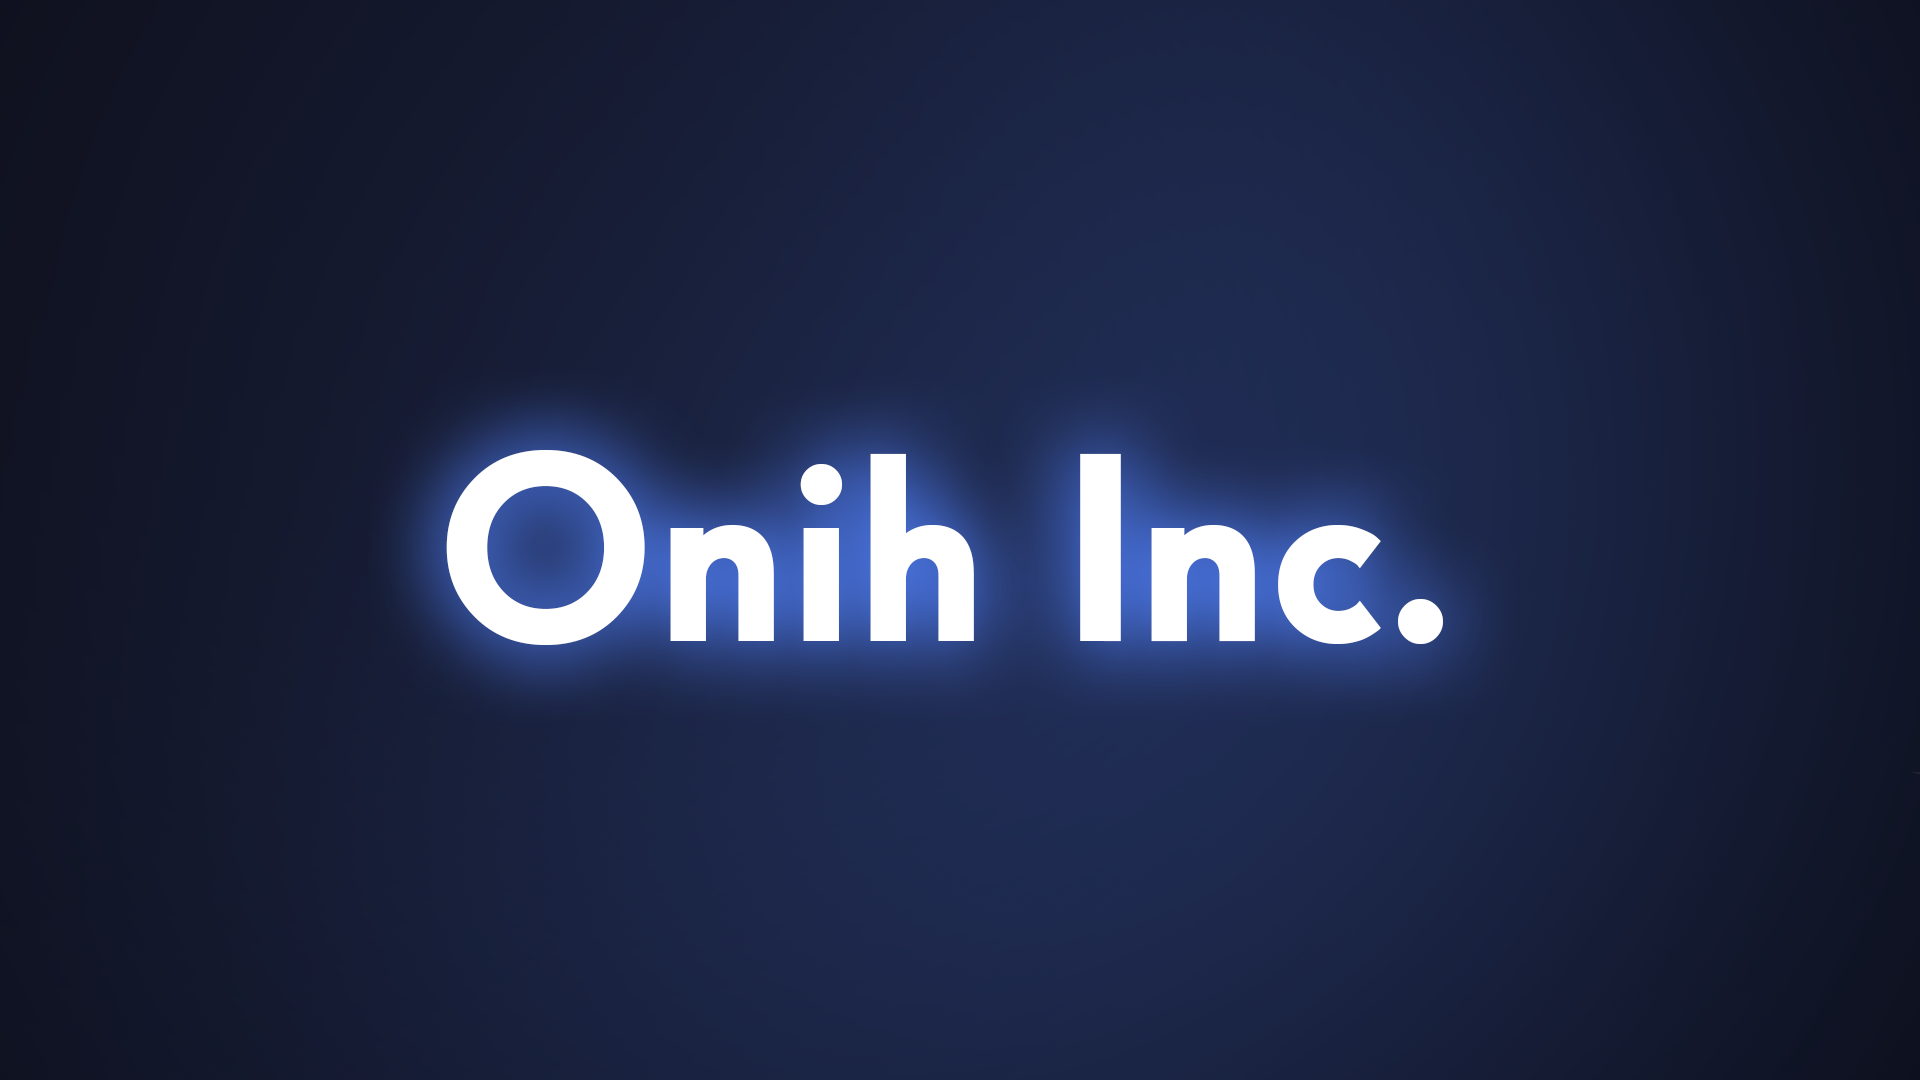 General 1920x1080 Onih Inc blue typography